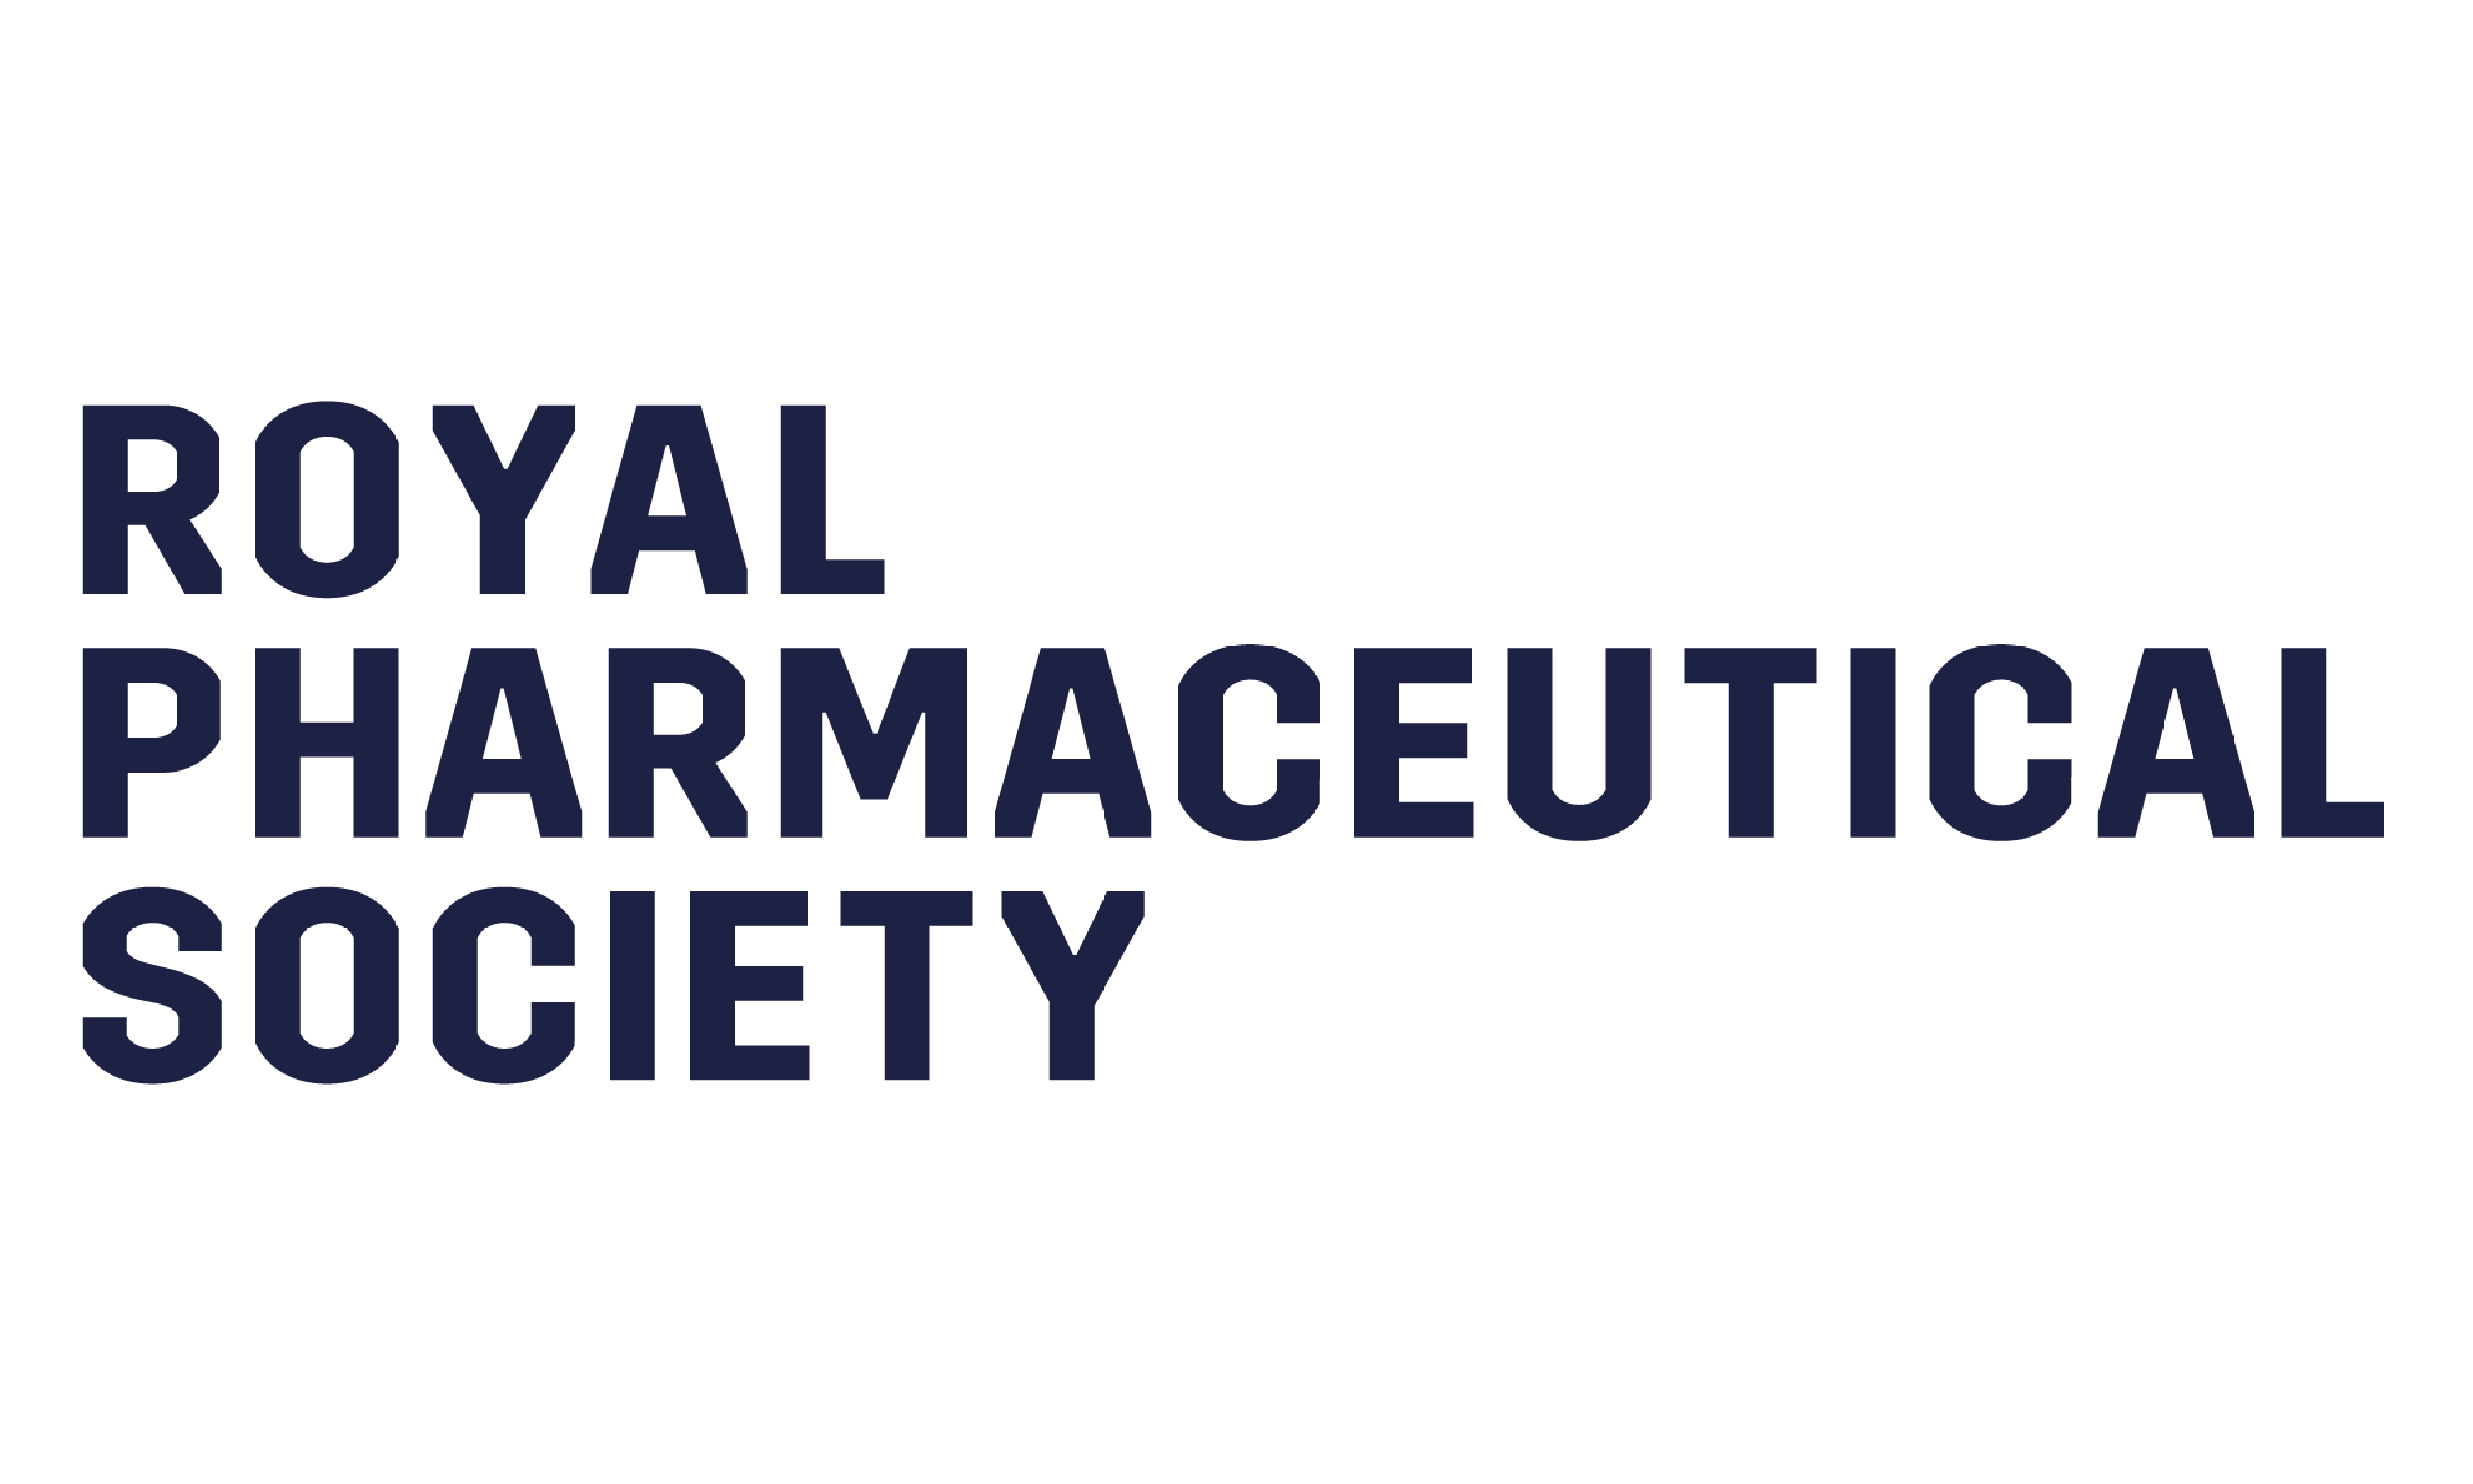 The Royal Pharmaceutical Society